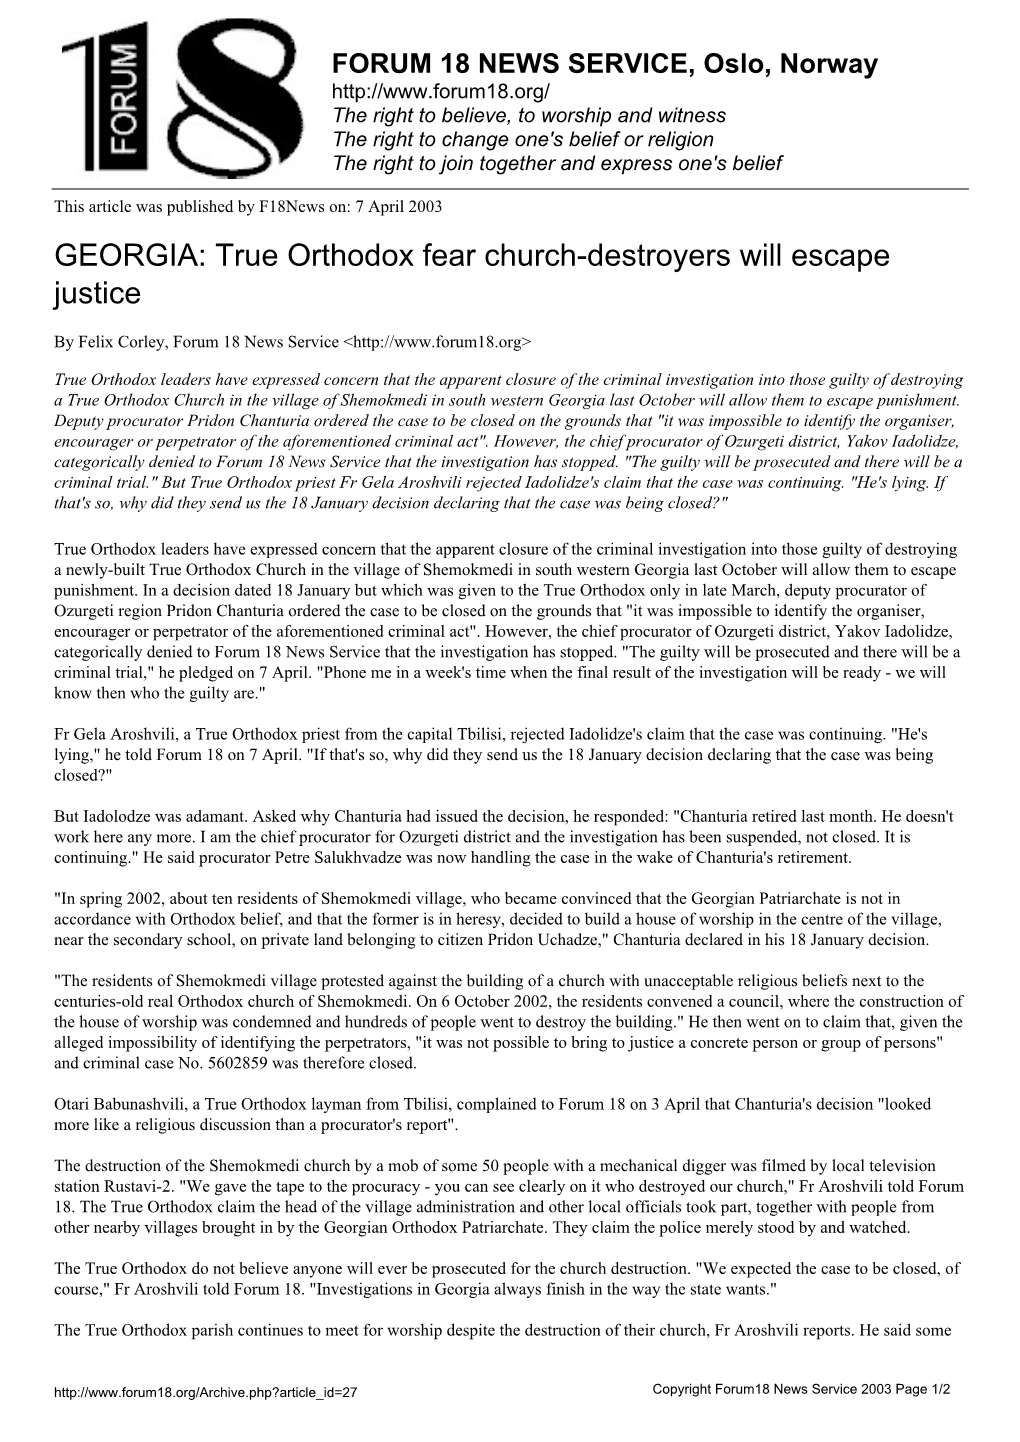 GEORGIA: True Orthodox Fear Church-Destroyers Will Escape Justice